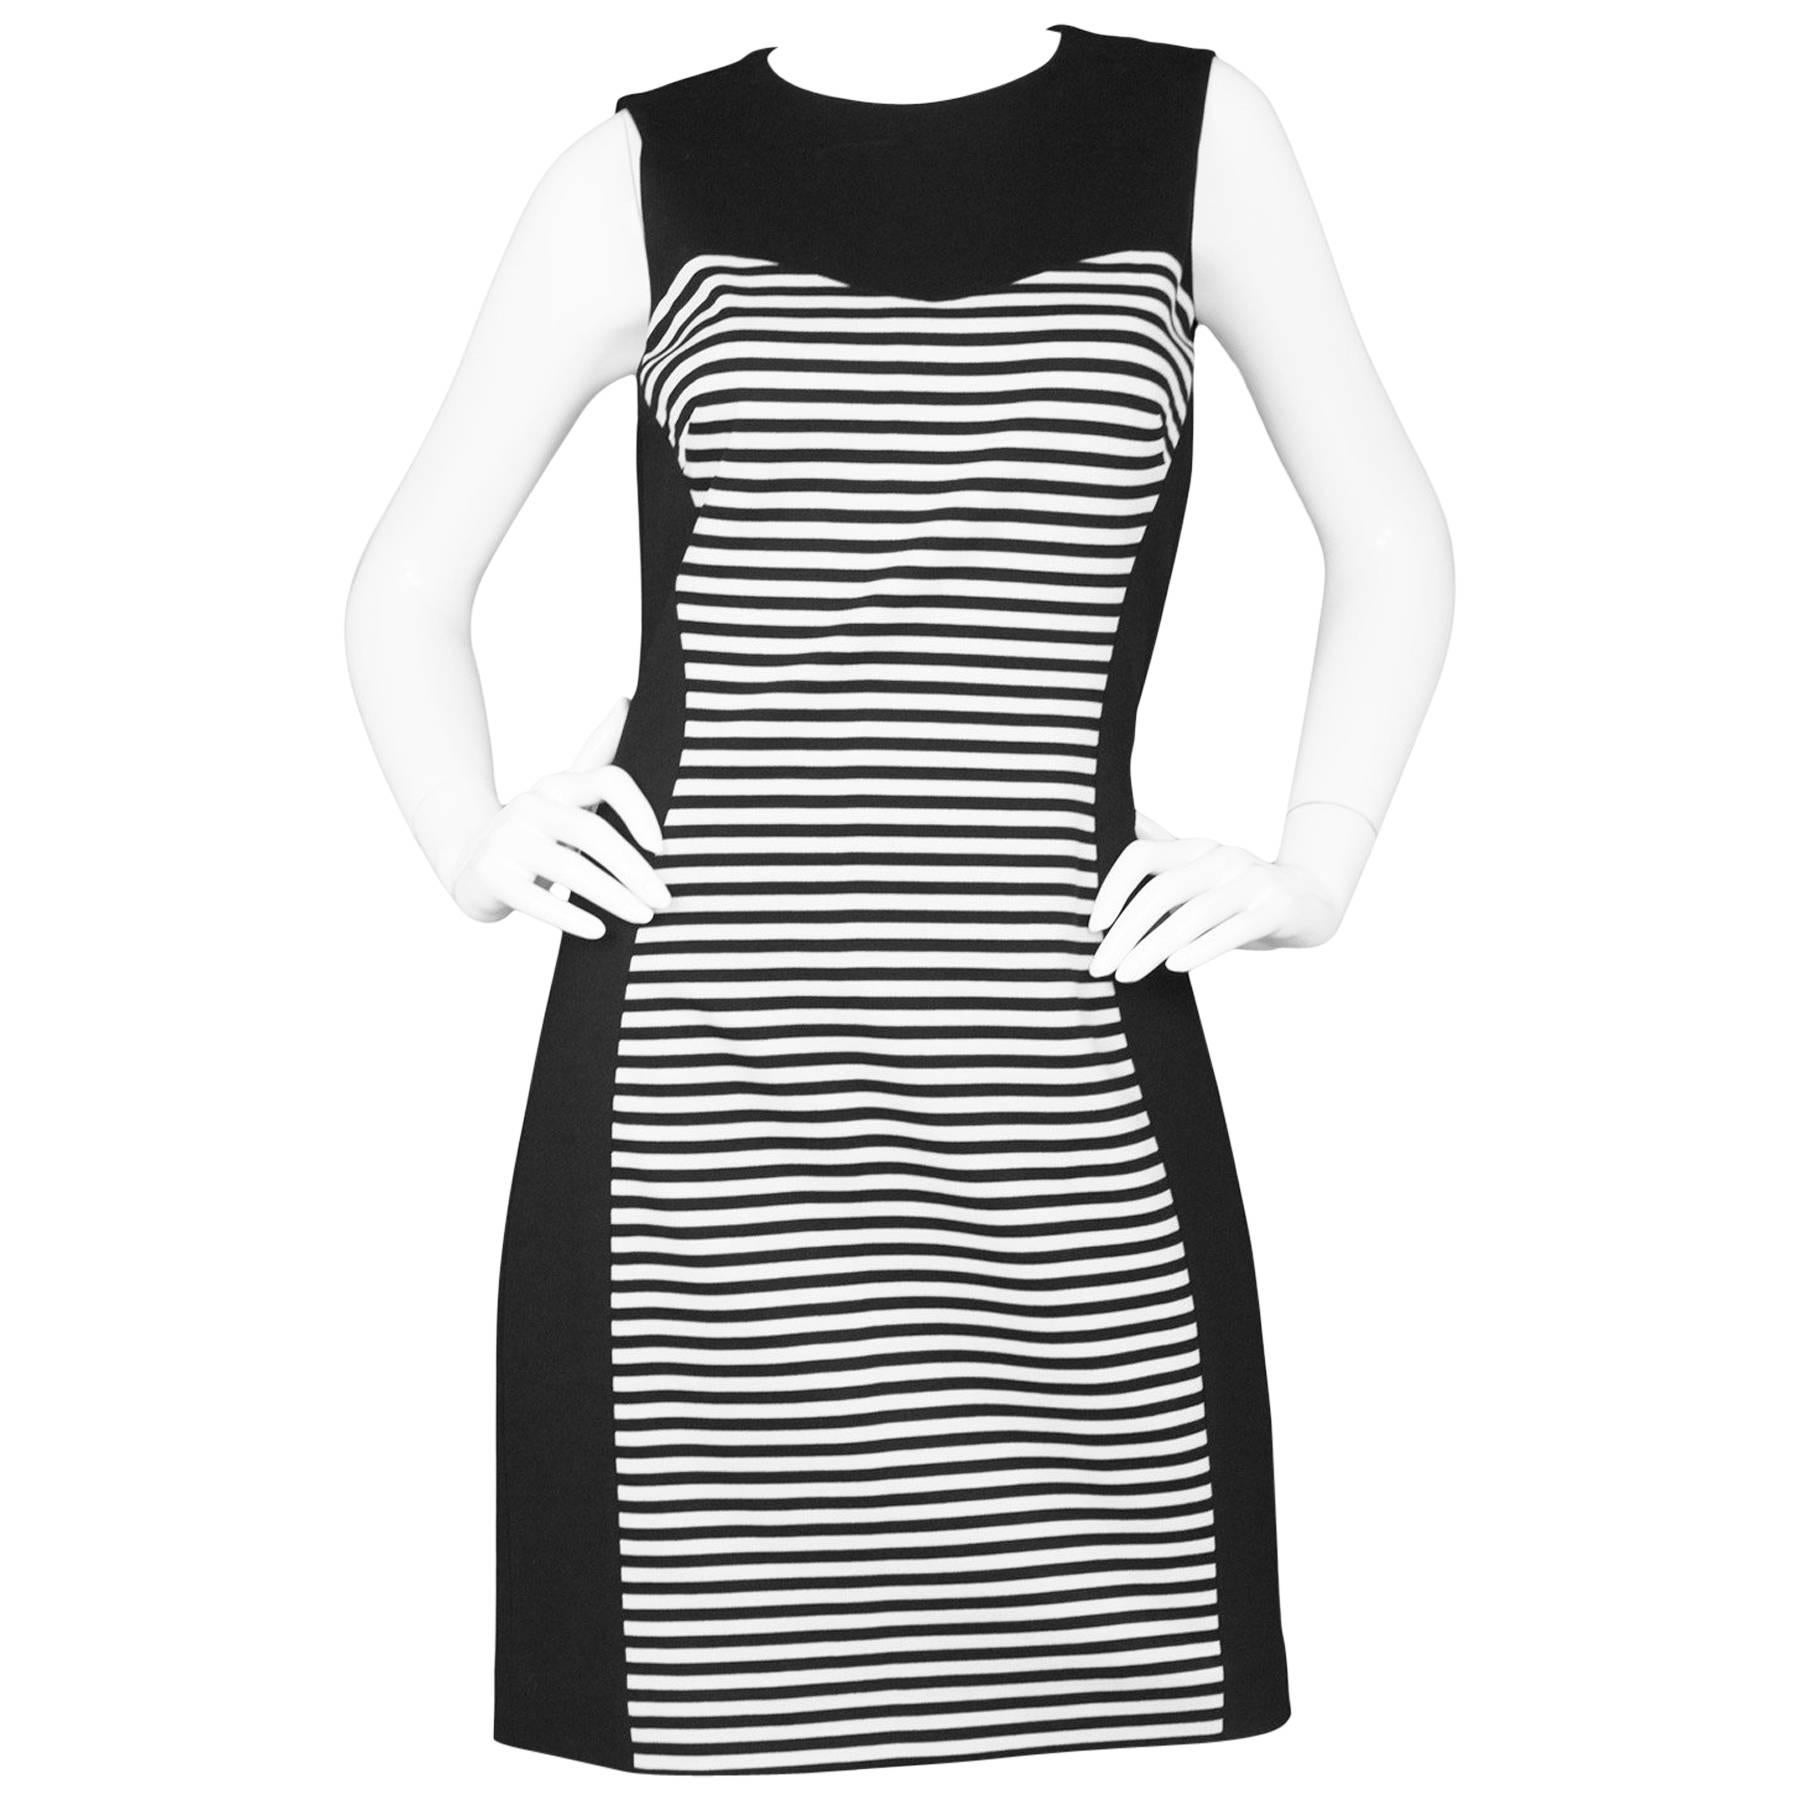 Michael Kors Black & White Stripe Sheath Dress sz US10